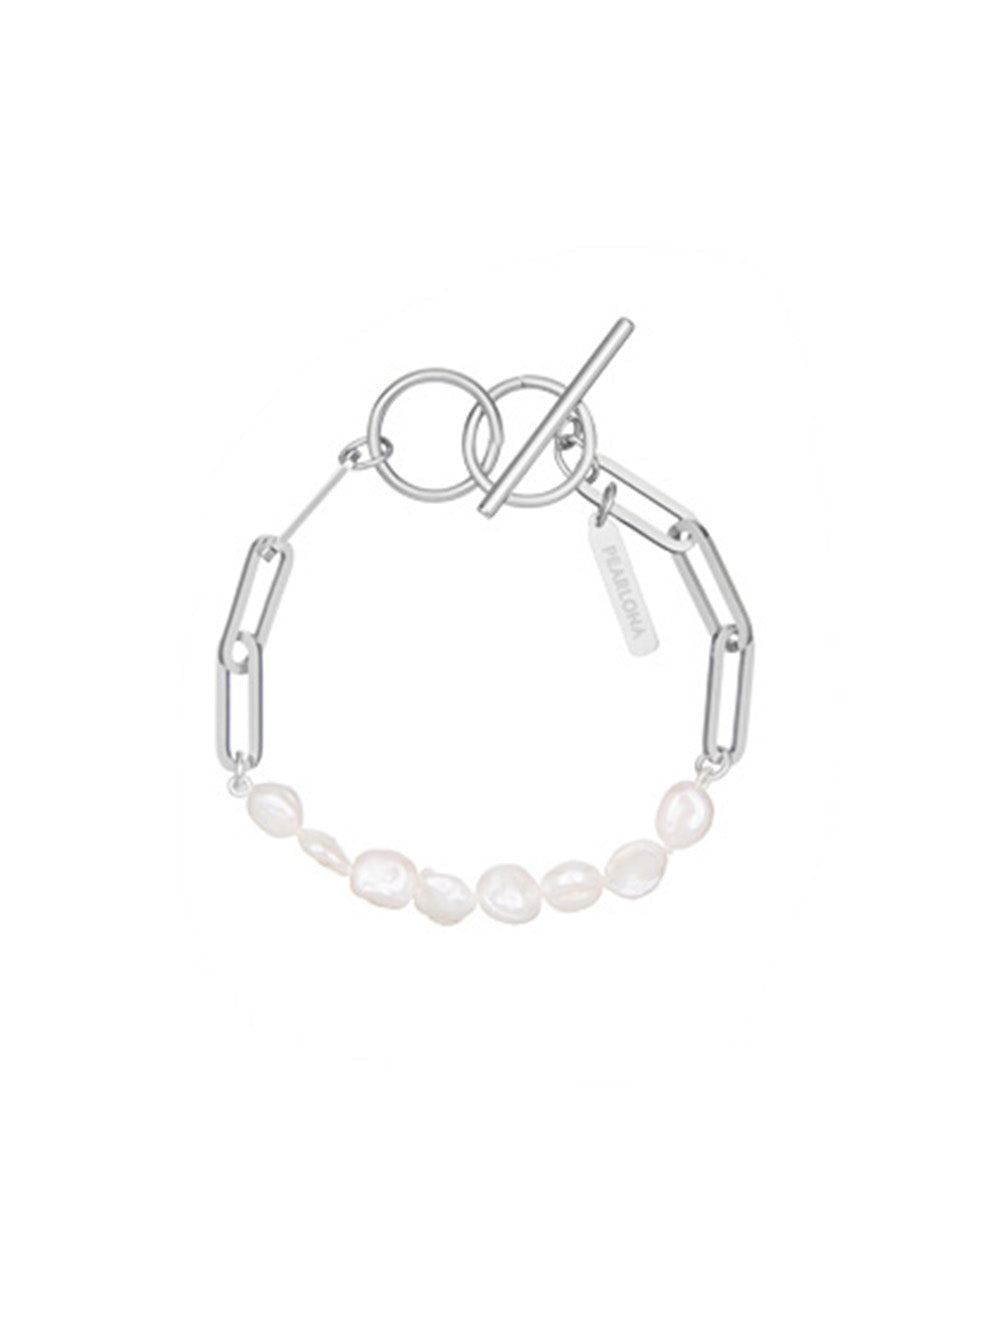 MUKTANK Baroque Pearl Silver Chain Double Panel Bracelet